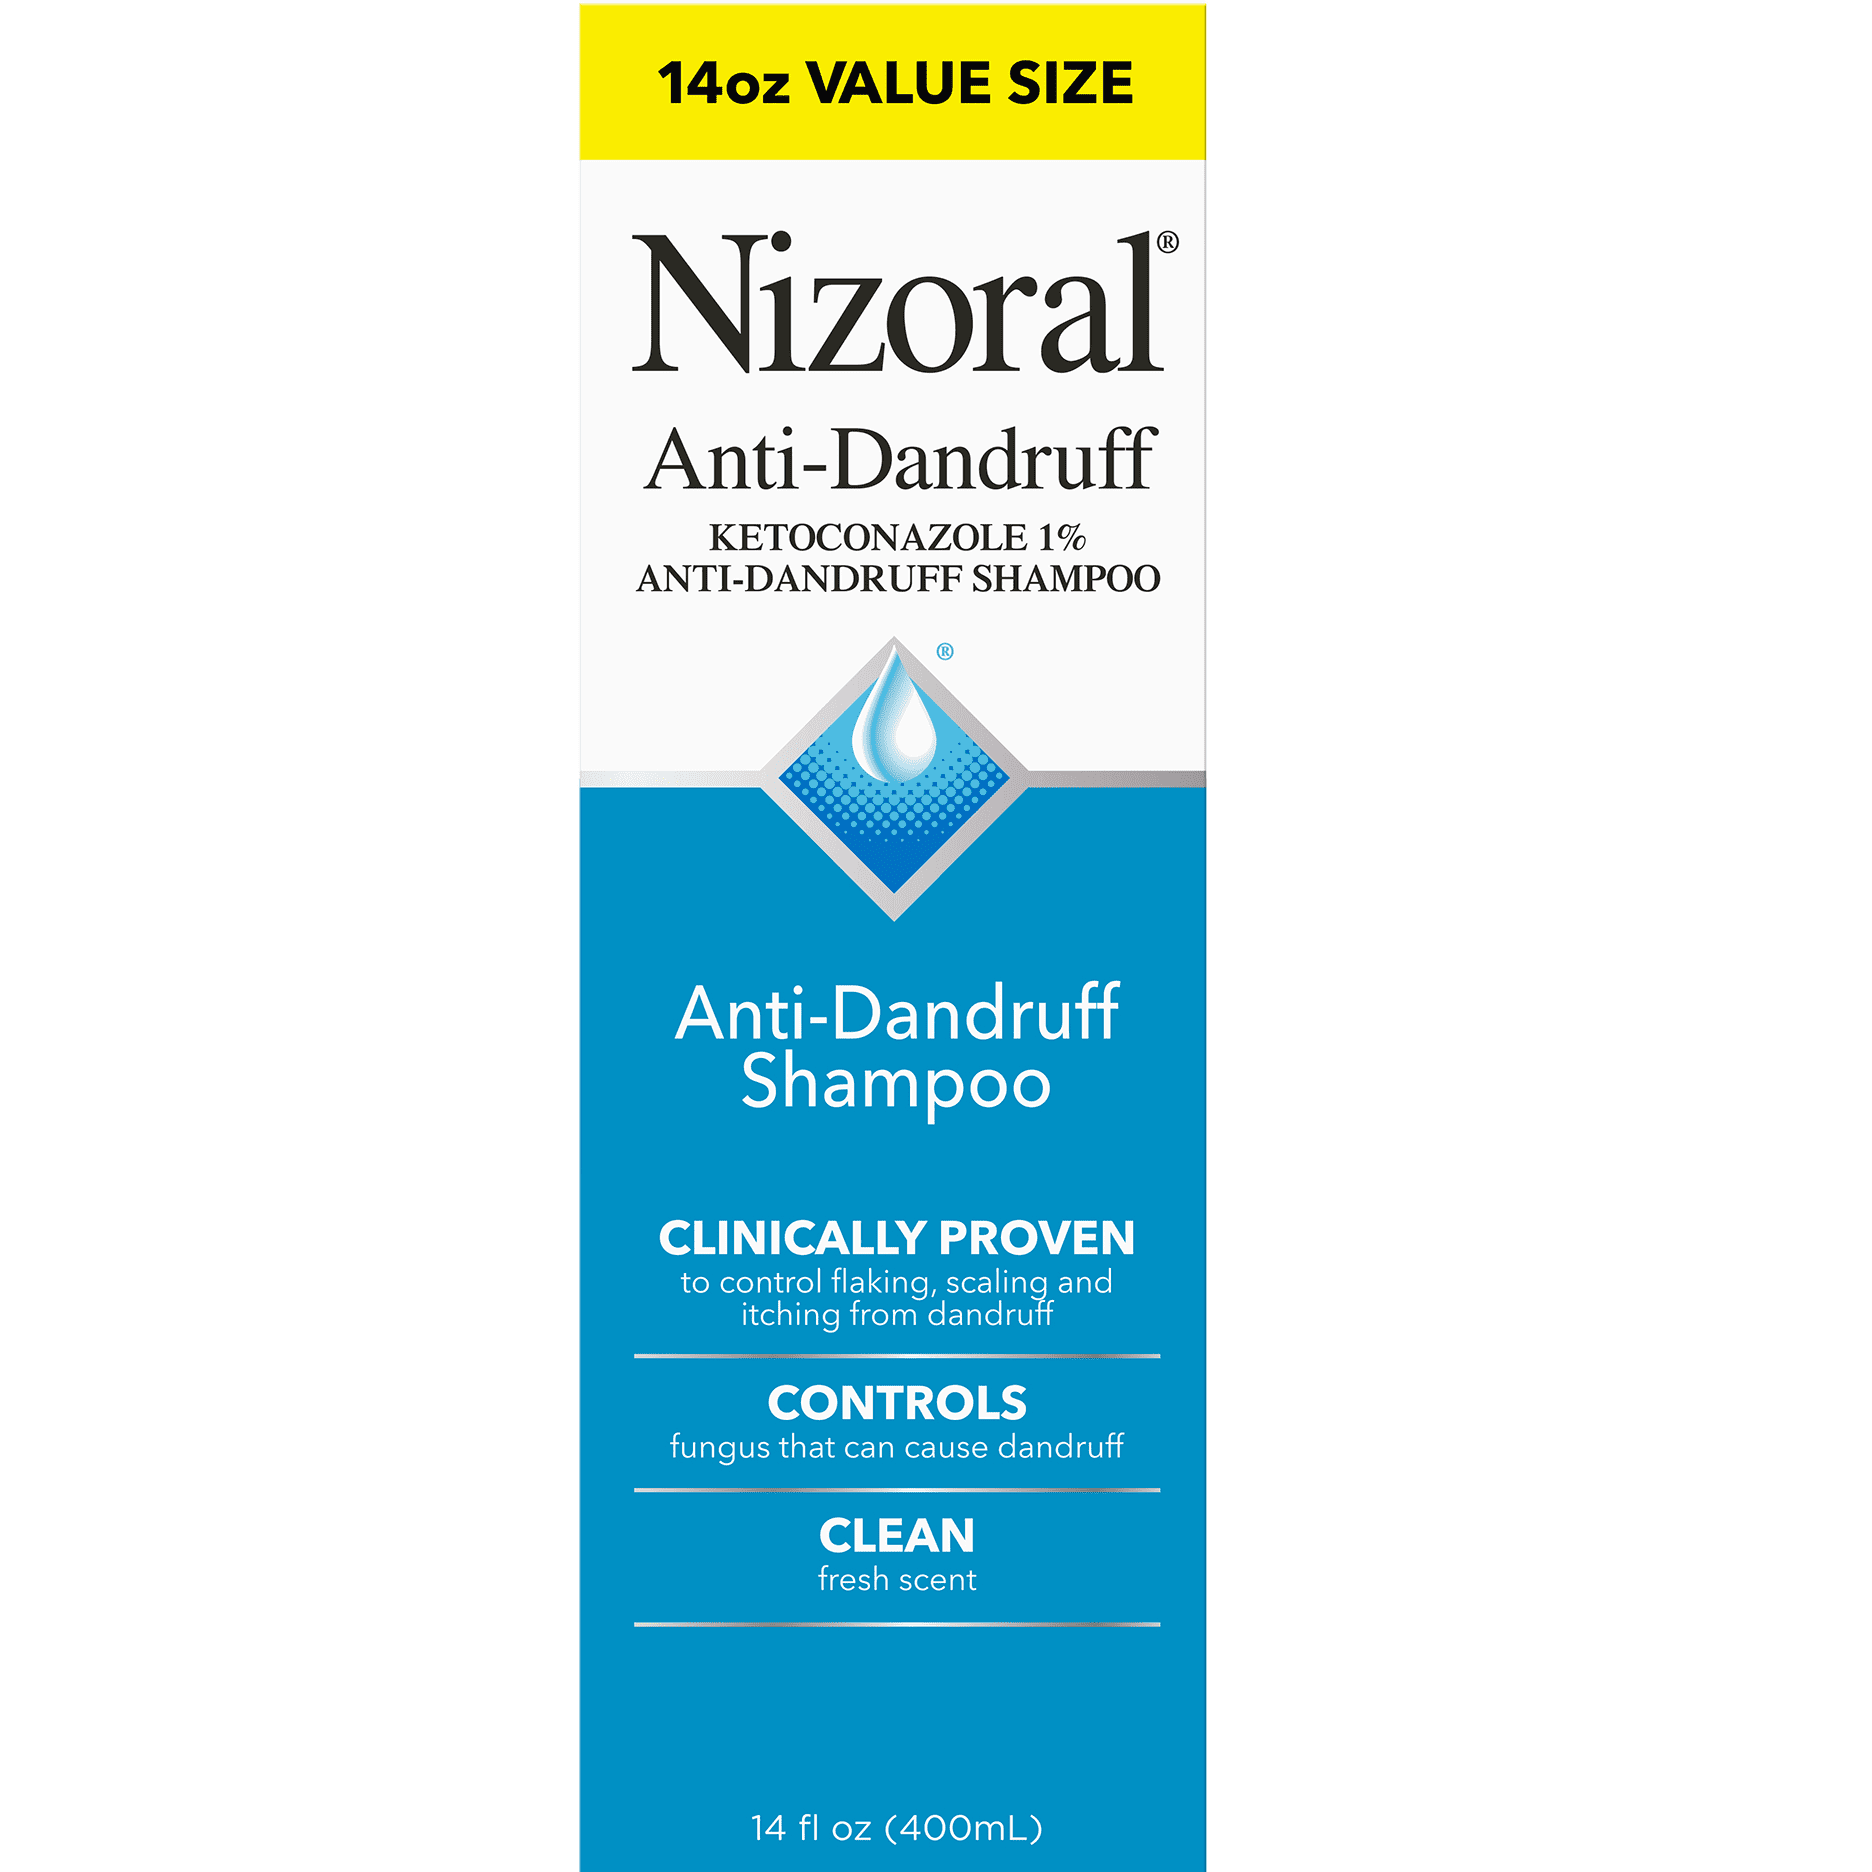 Nizoral A-D Anti-Dandruff Shampoo, Value Size, 14 fl oz